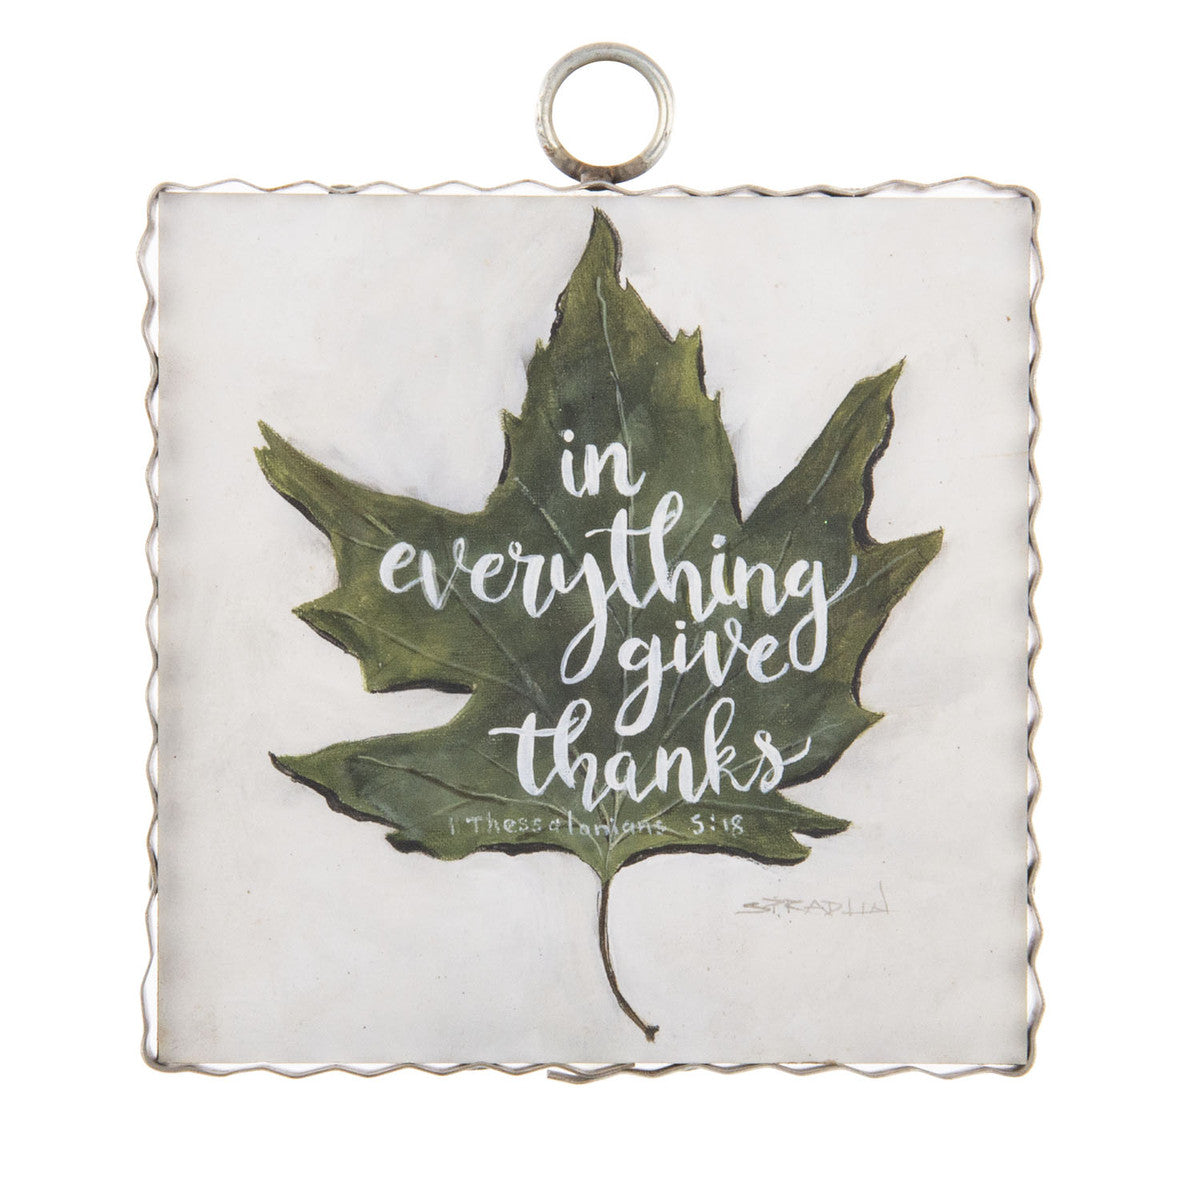 Charm - "Give Thanks" Leaf